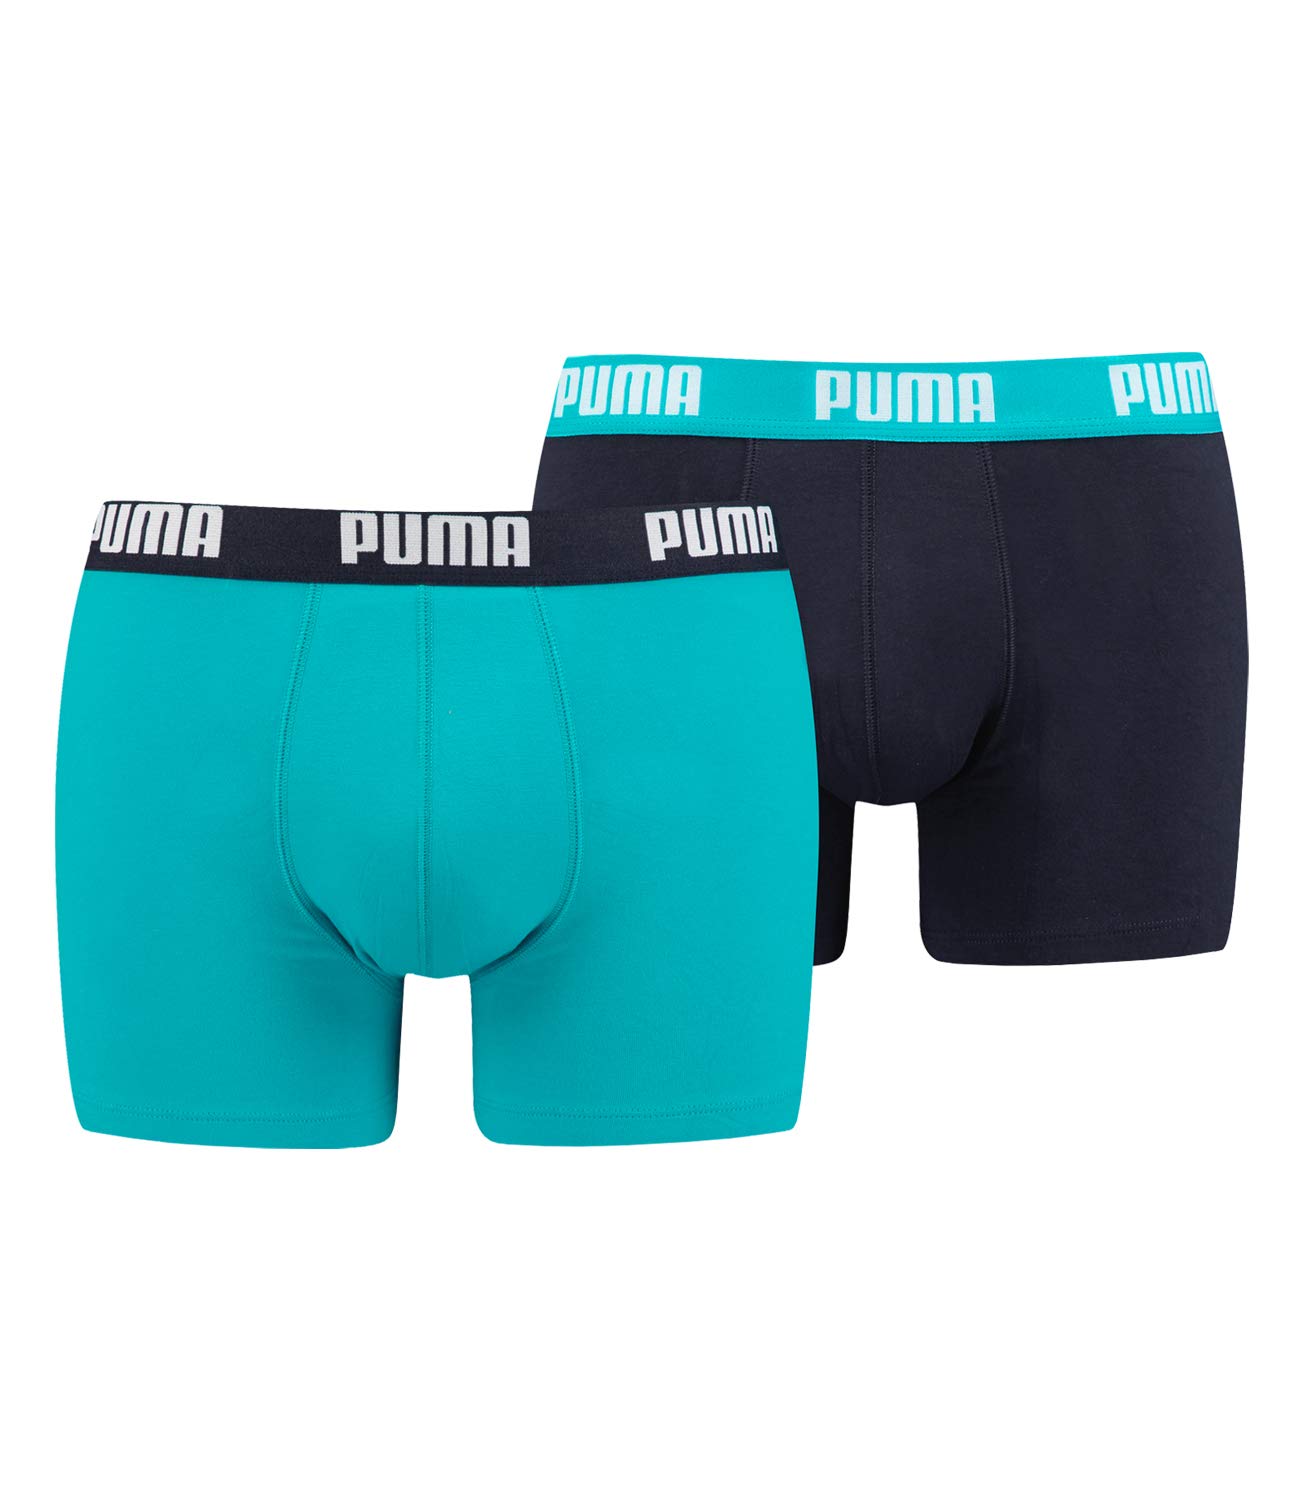 PUMA Herren Puma Basic 2p Boxer Shorts, (Aqua/ Blue 796), M EU